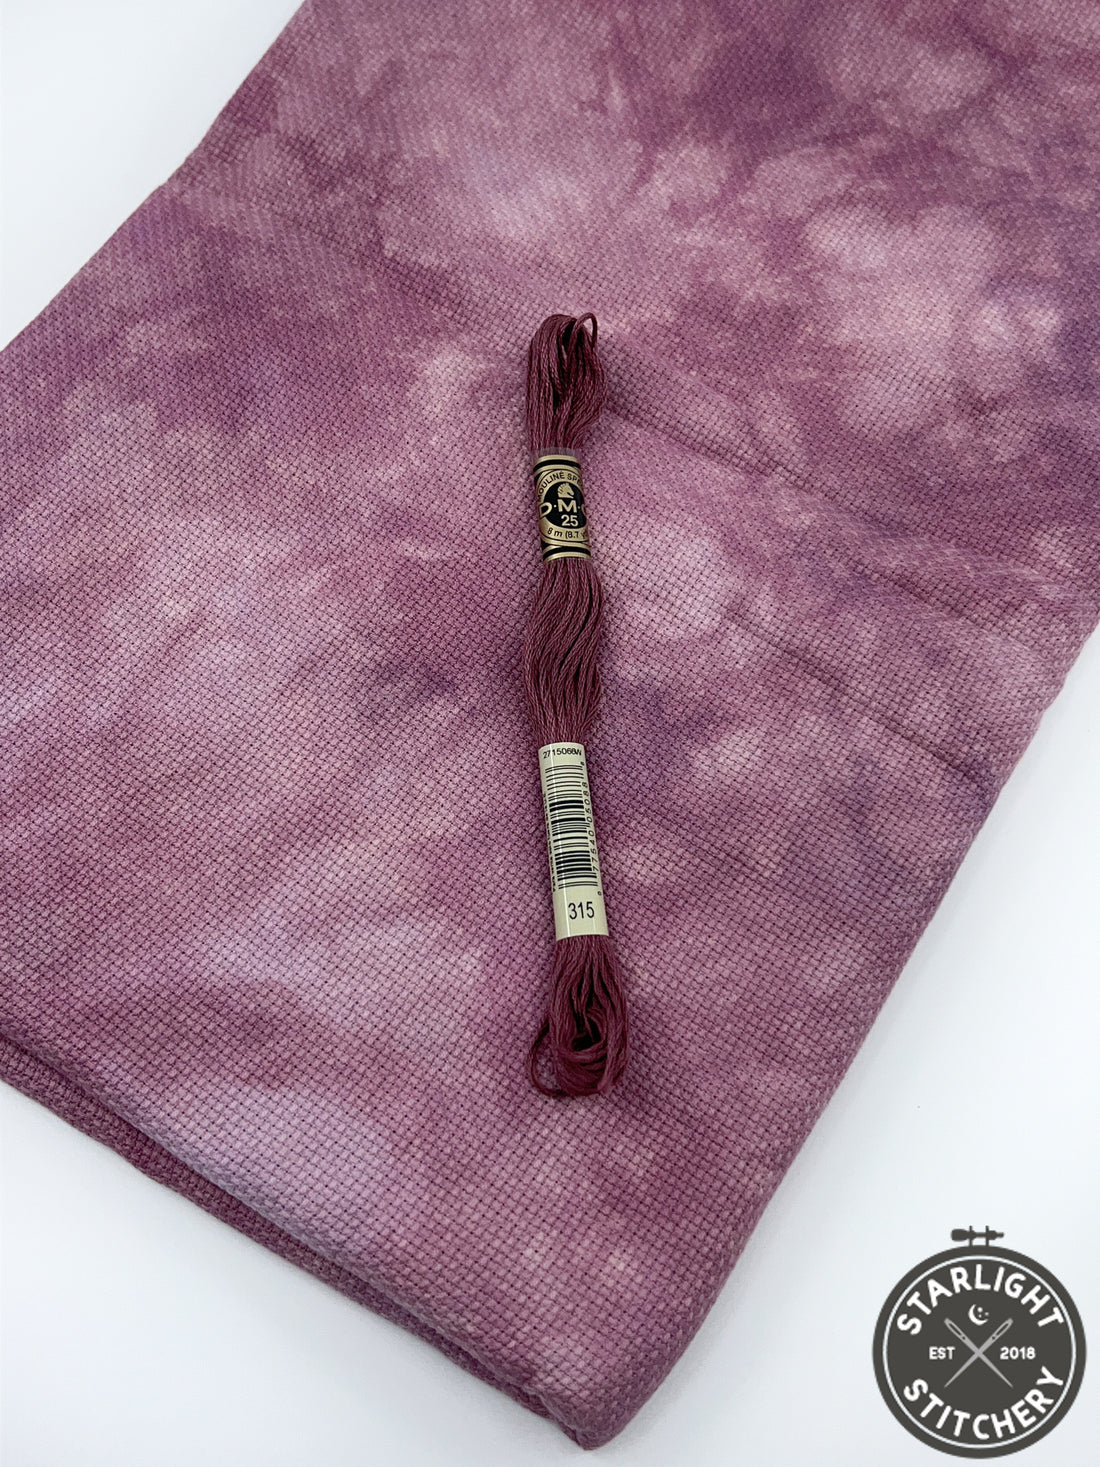 "Tea Rose" Atomic Ranch Fabrics - Hand Dyed Cross Stitch Fabric